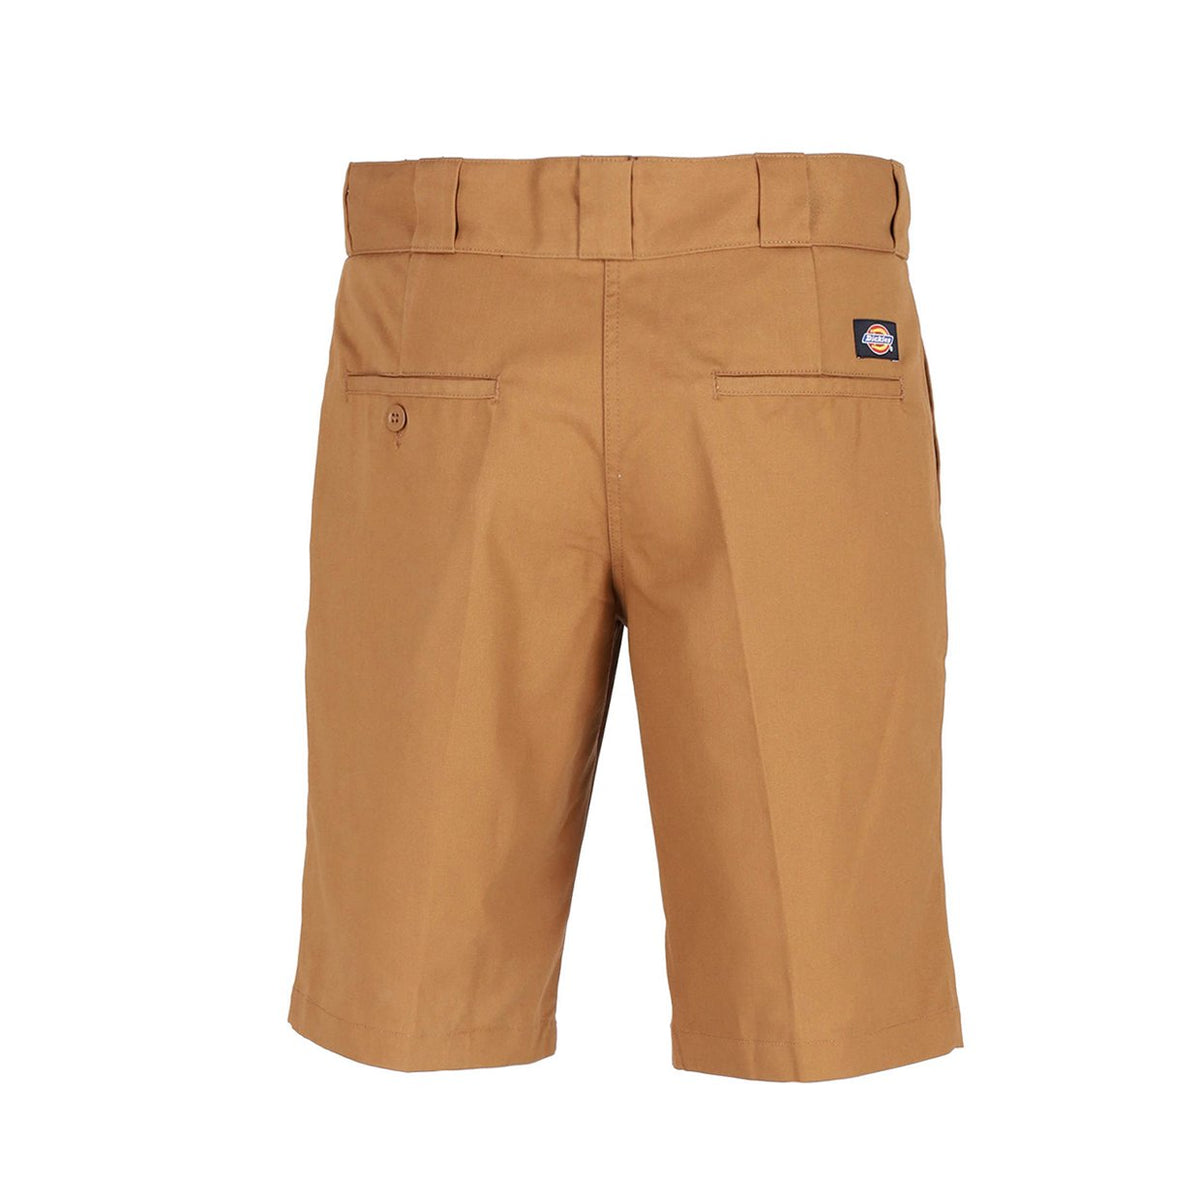 Blacksmith Men's Cargo Work Shorts - Khaki